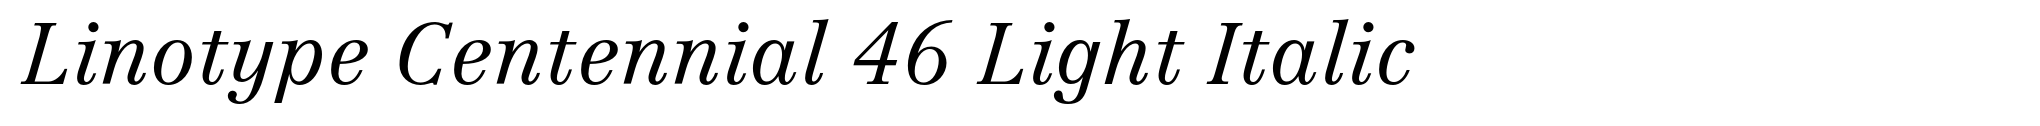 Linotype Centennial 46 Light Italic image